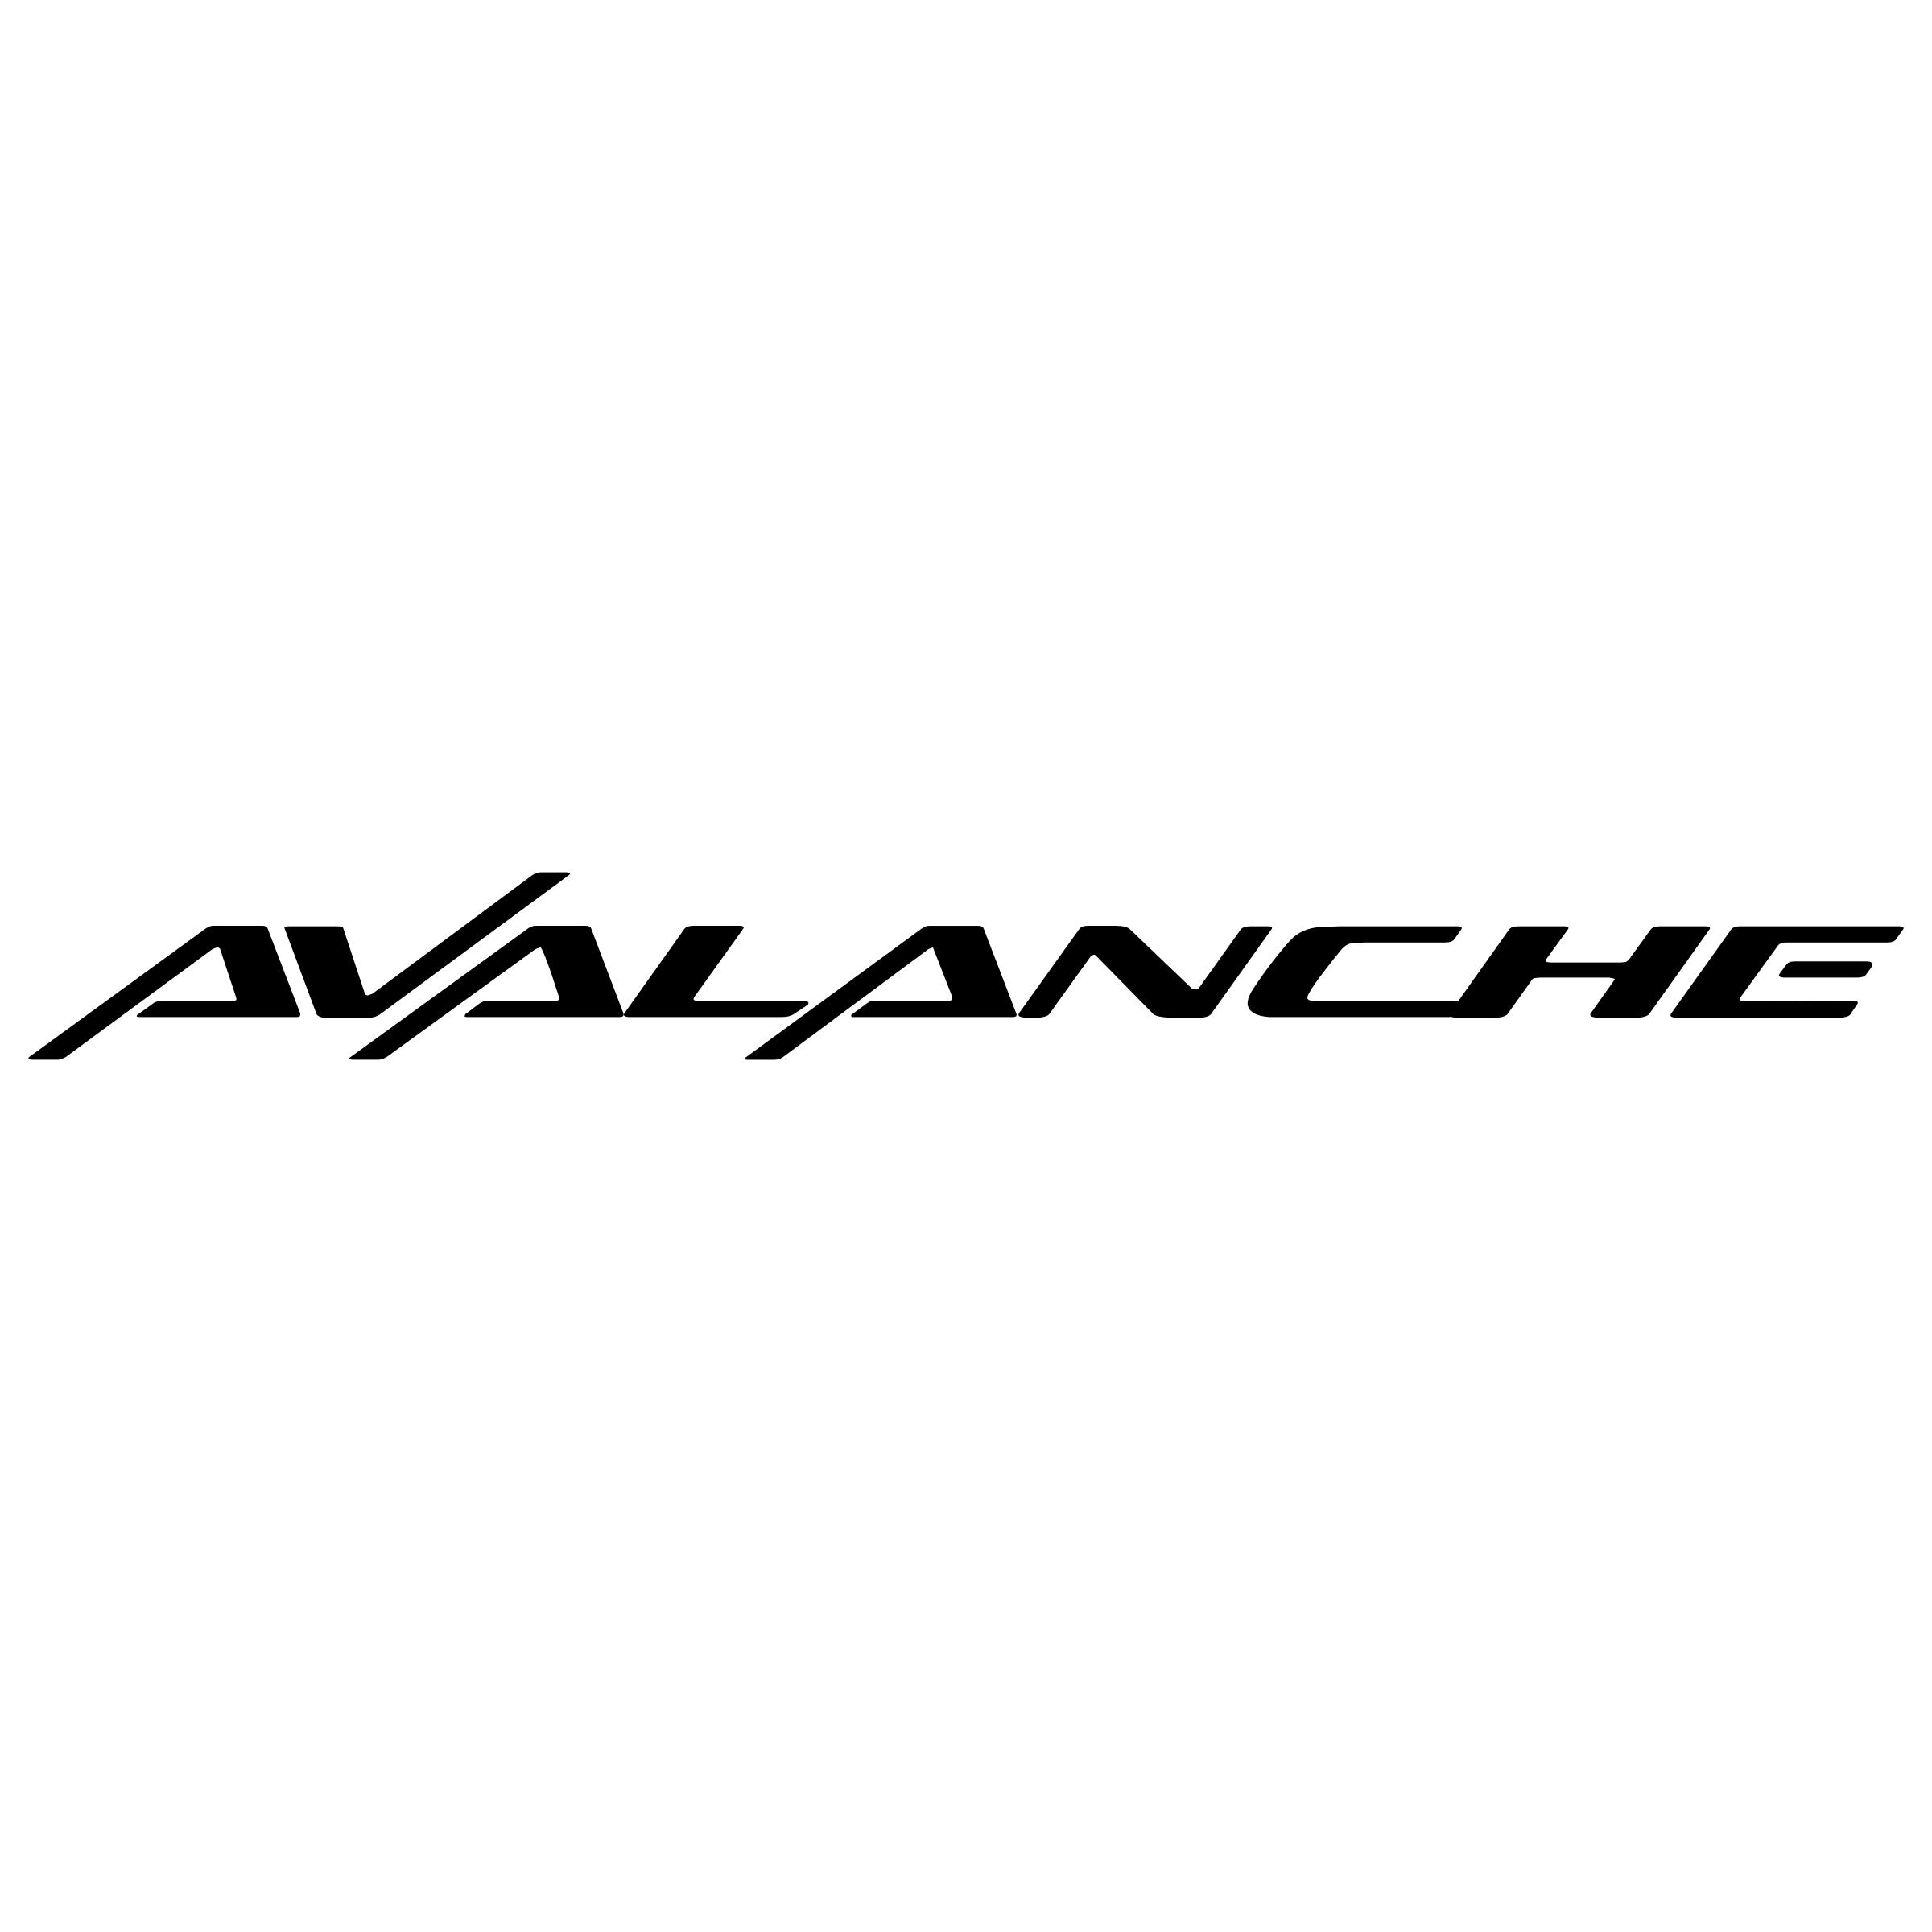 Avalanche Logo - Avalanche Logo PNG Transparent & SVG Vector - Freebie Supply